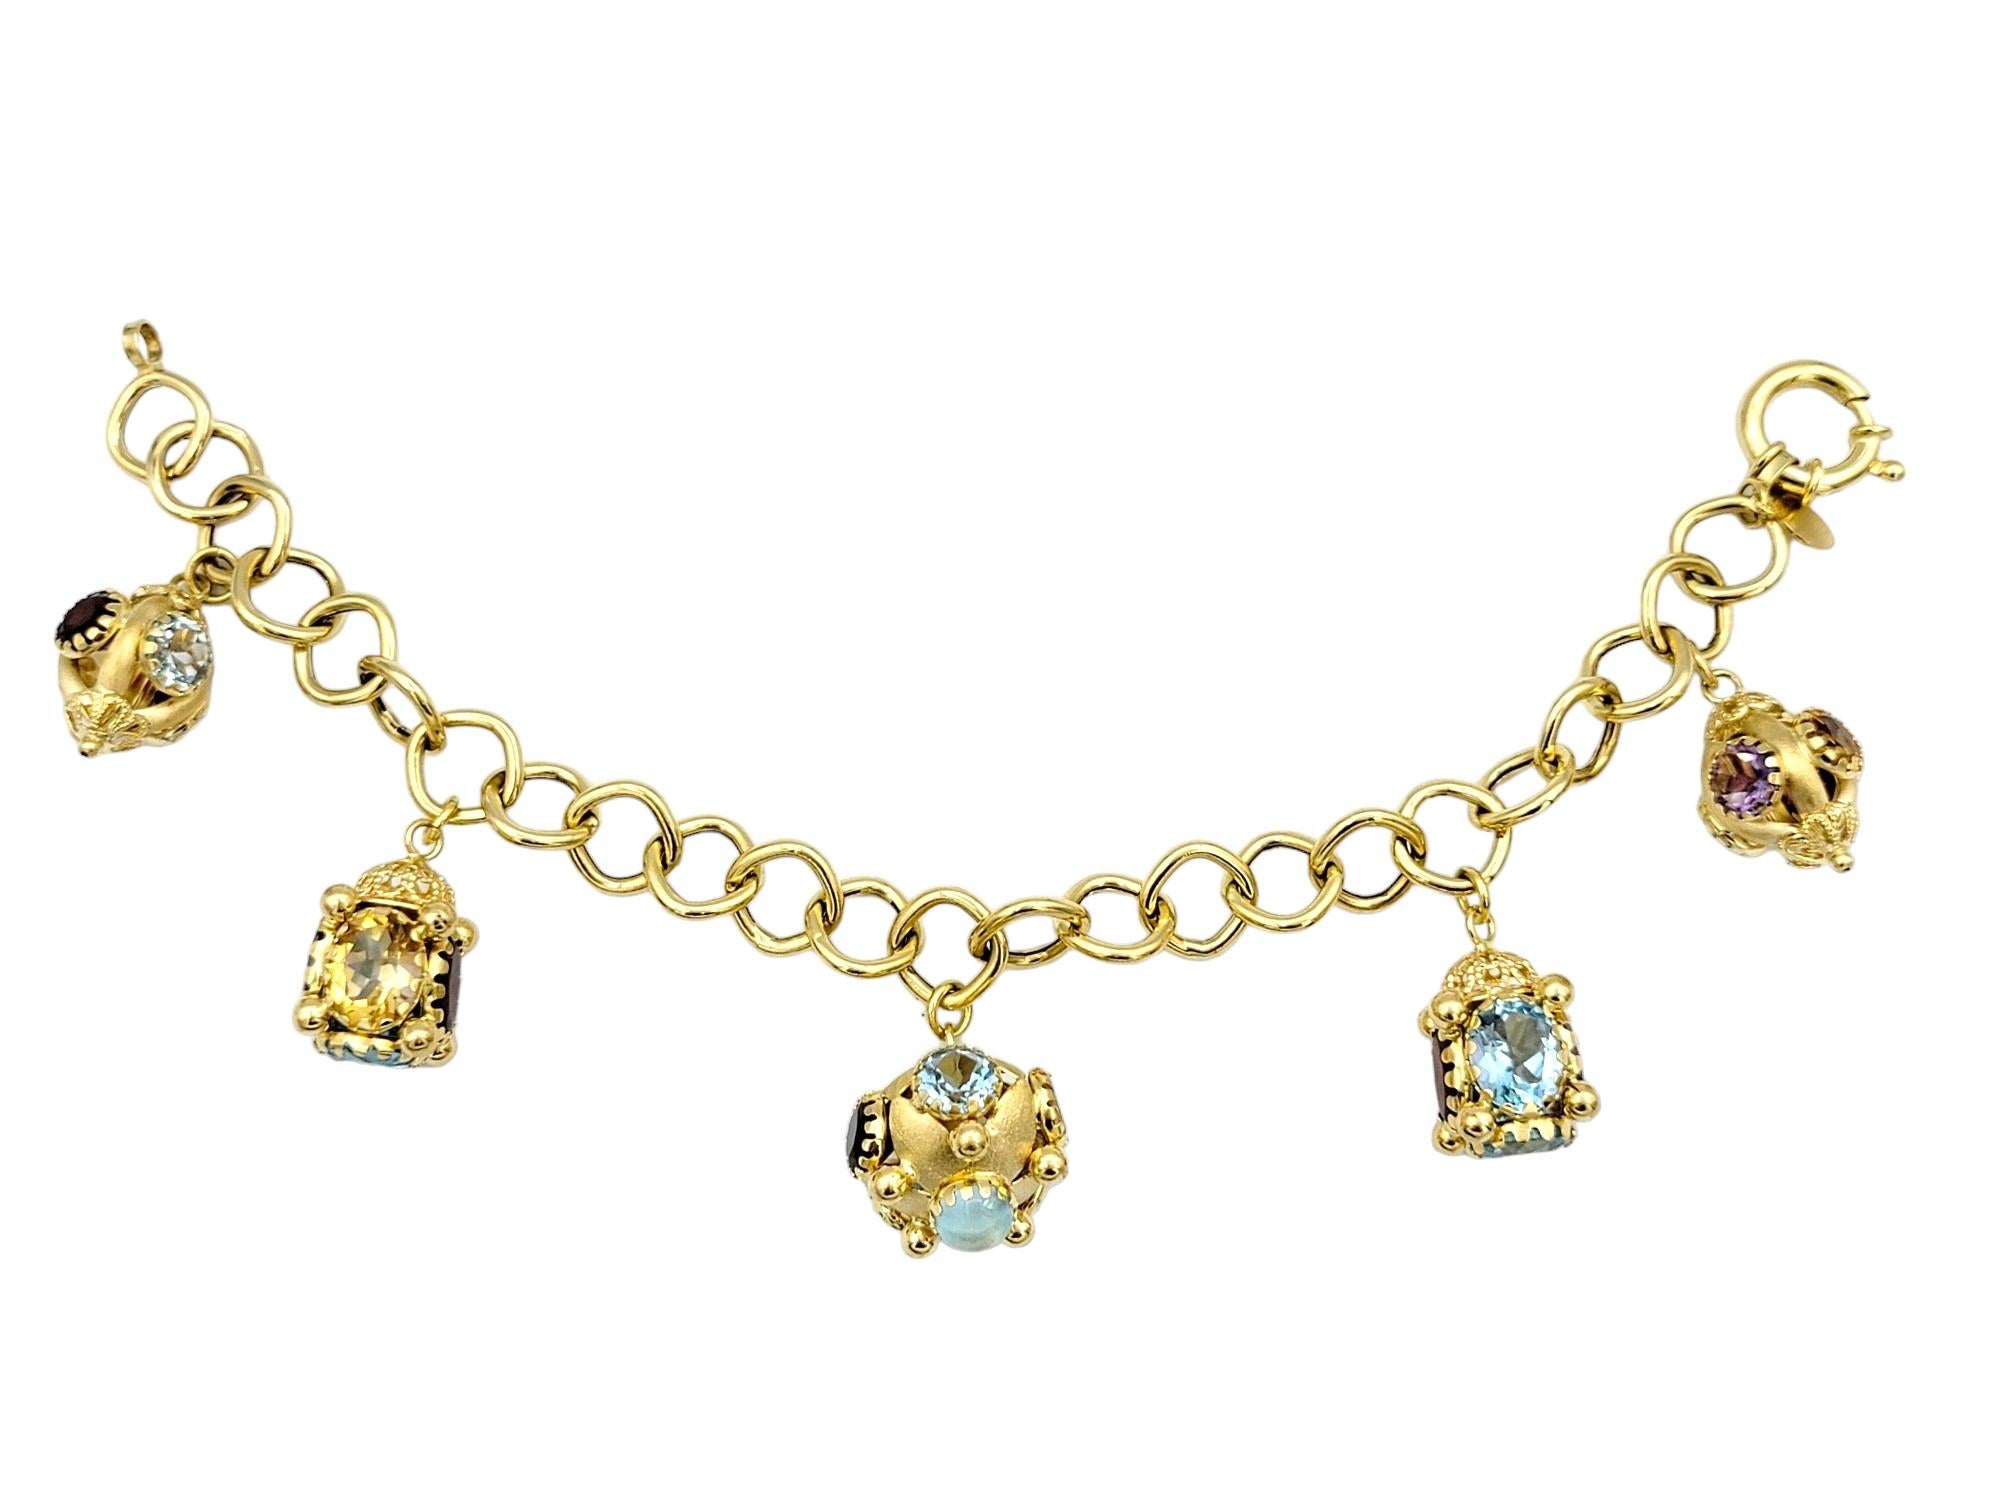 Contemporary Multi-Colored Gemstone Dangle Charm Bracelet Set in 18 Karat Yellow Gold